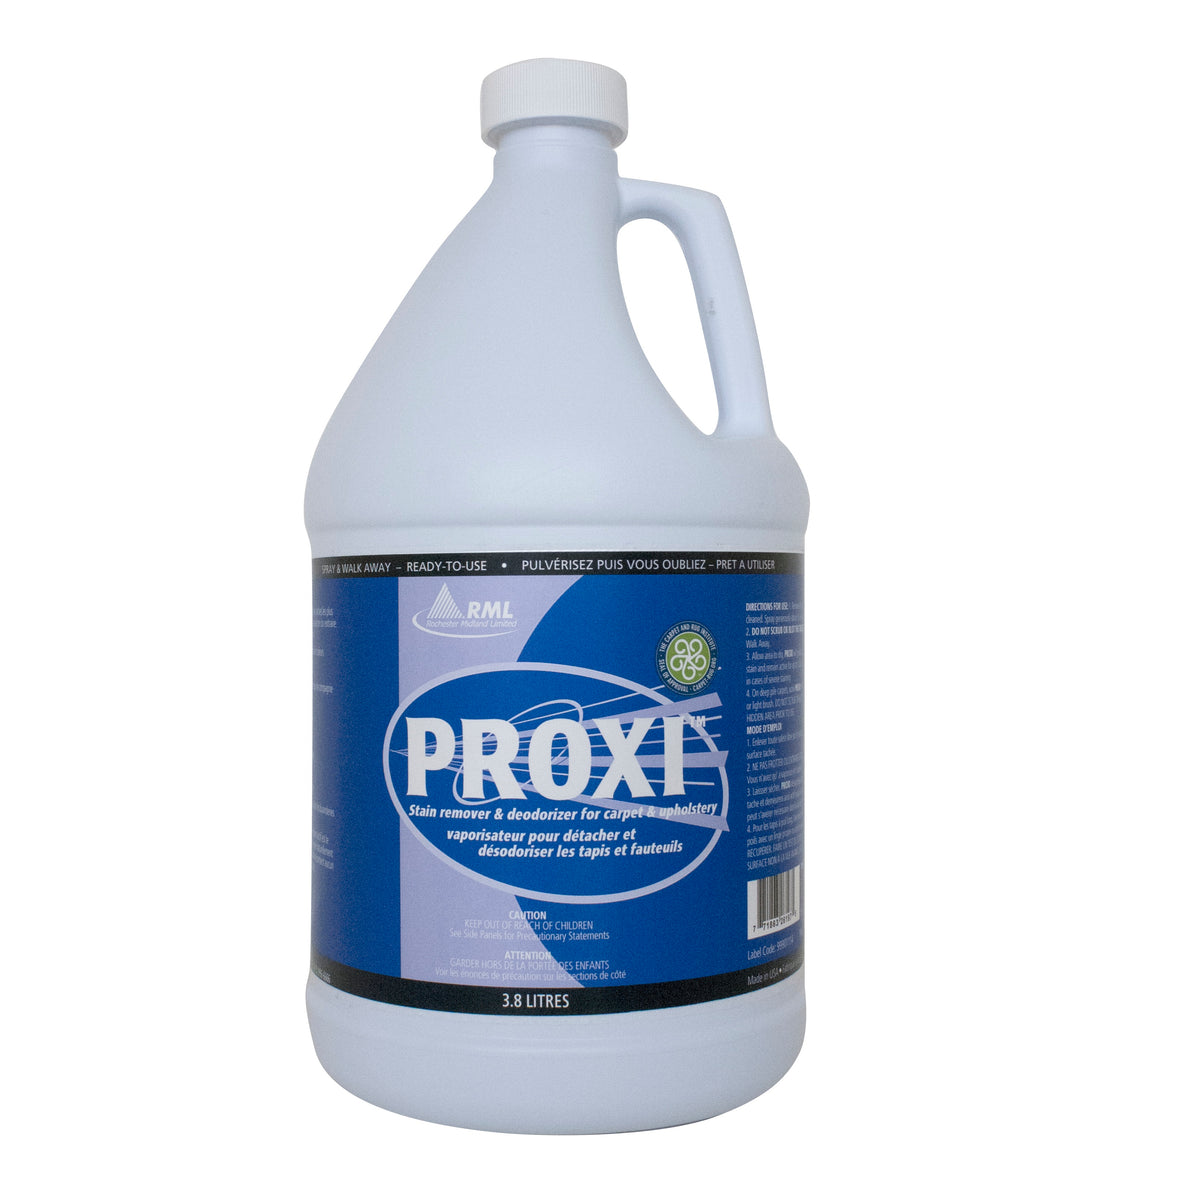 Proxi Spray & Walk Away — Three Star